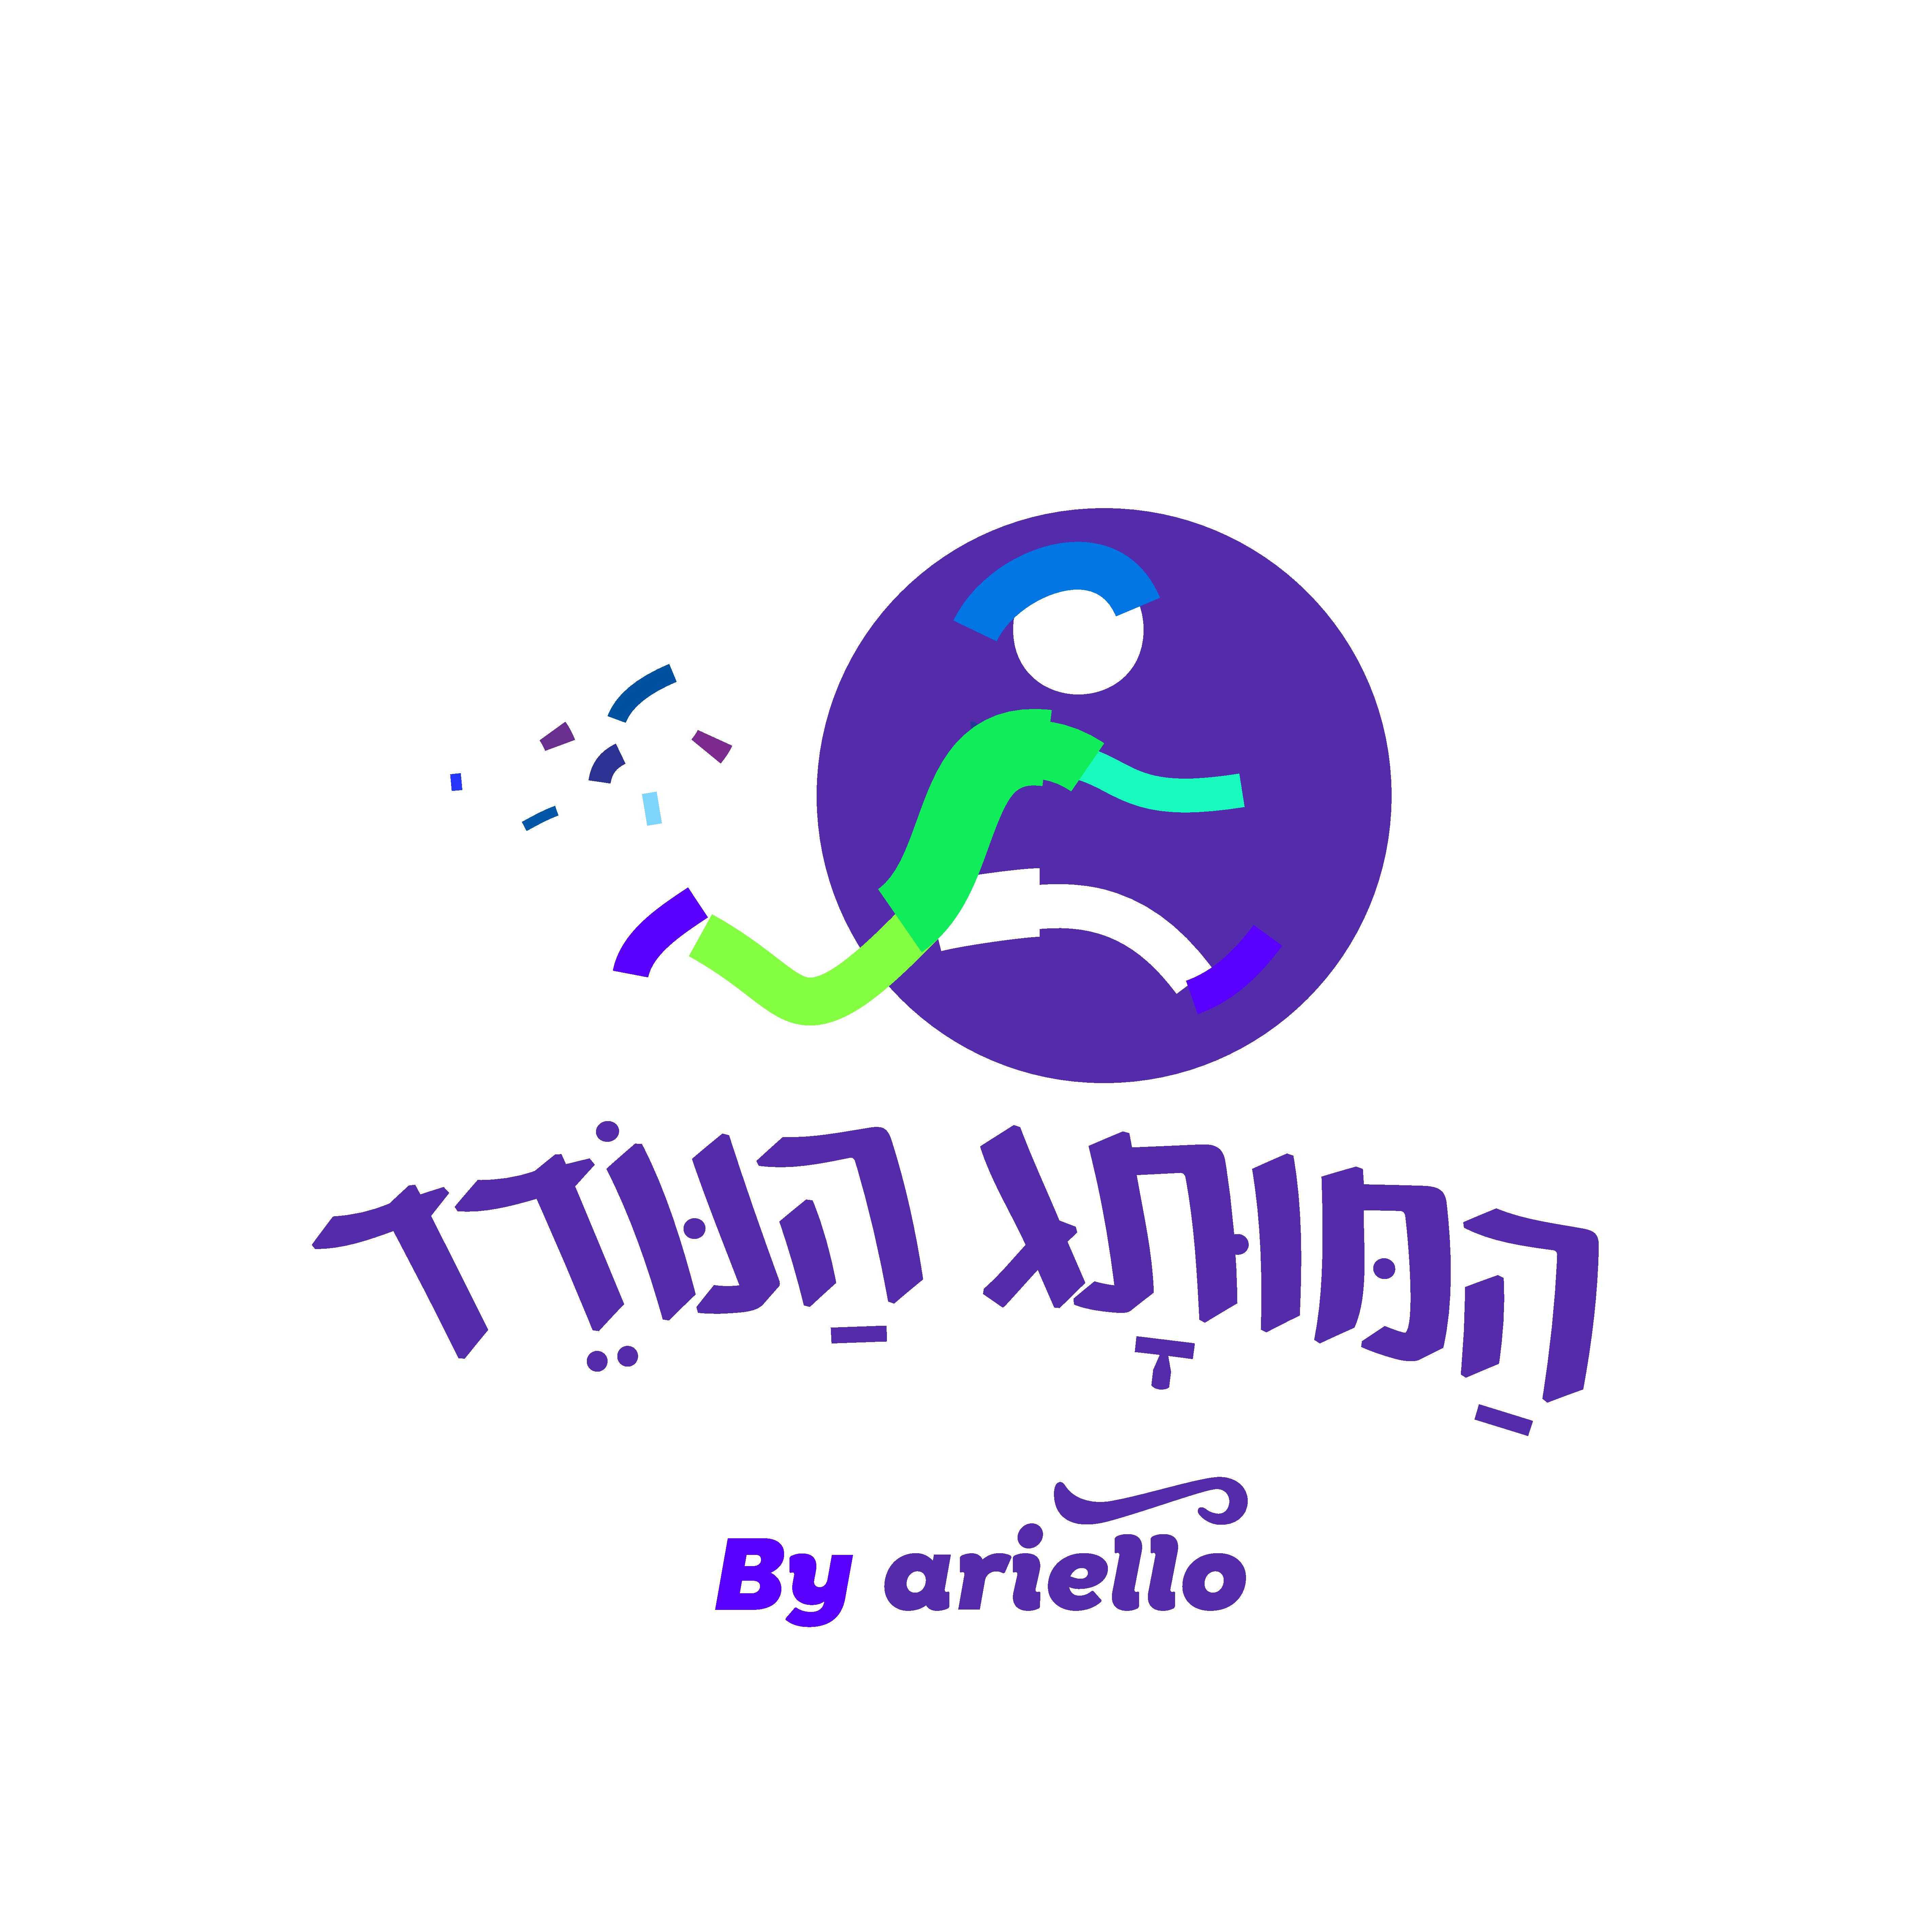  Ariello המותג הנודד  Logo